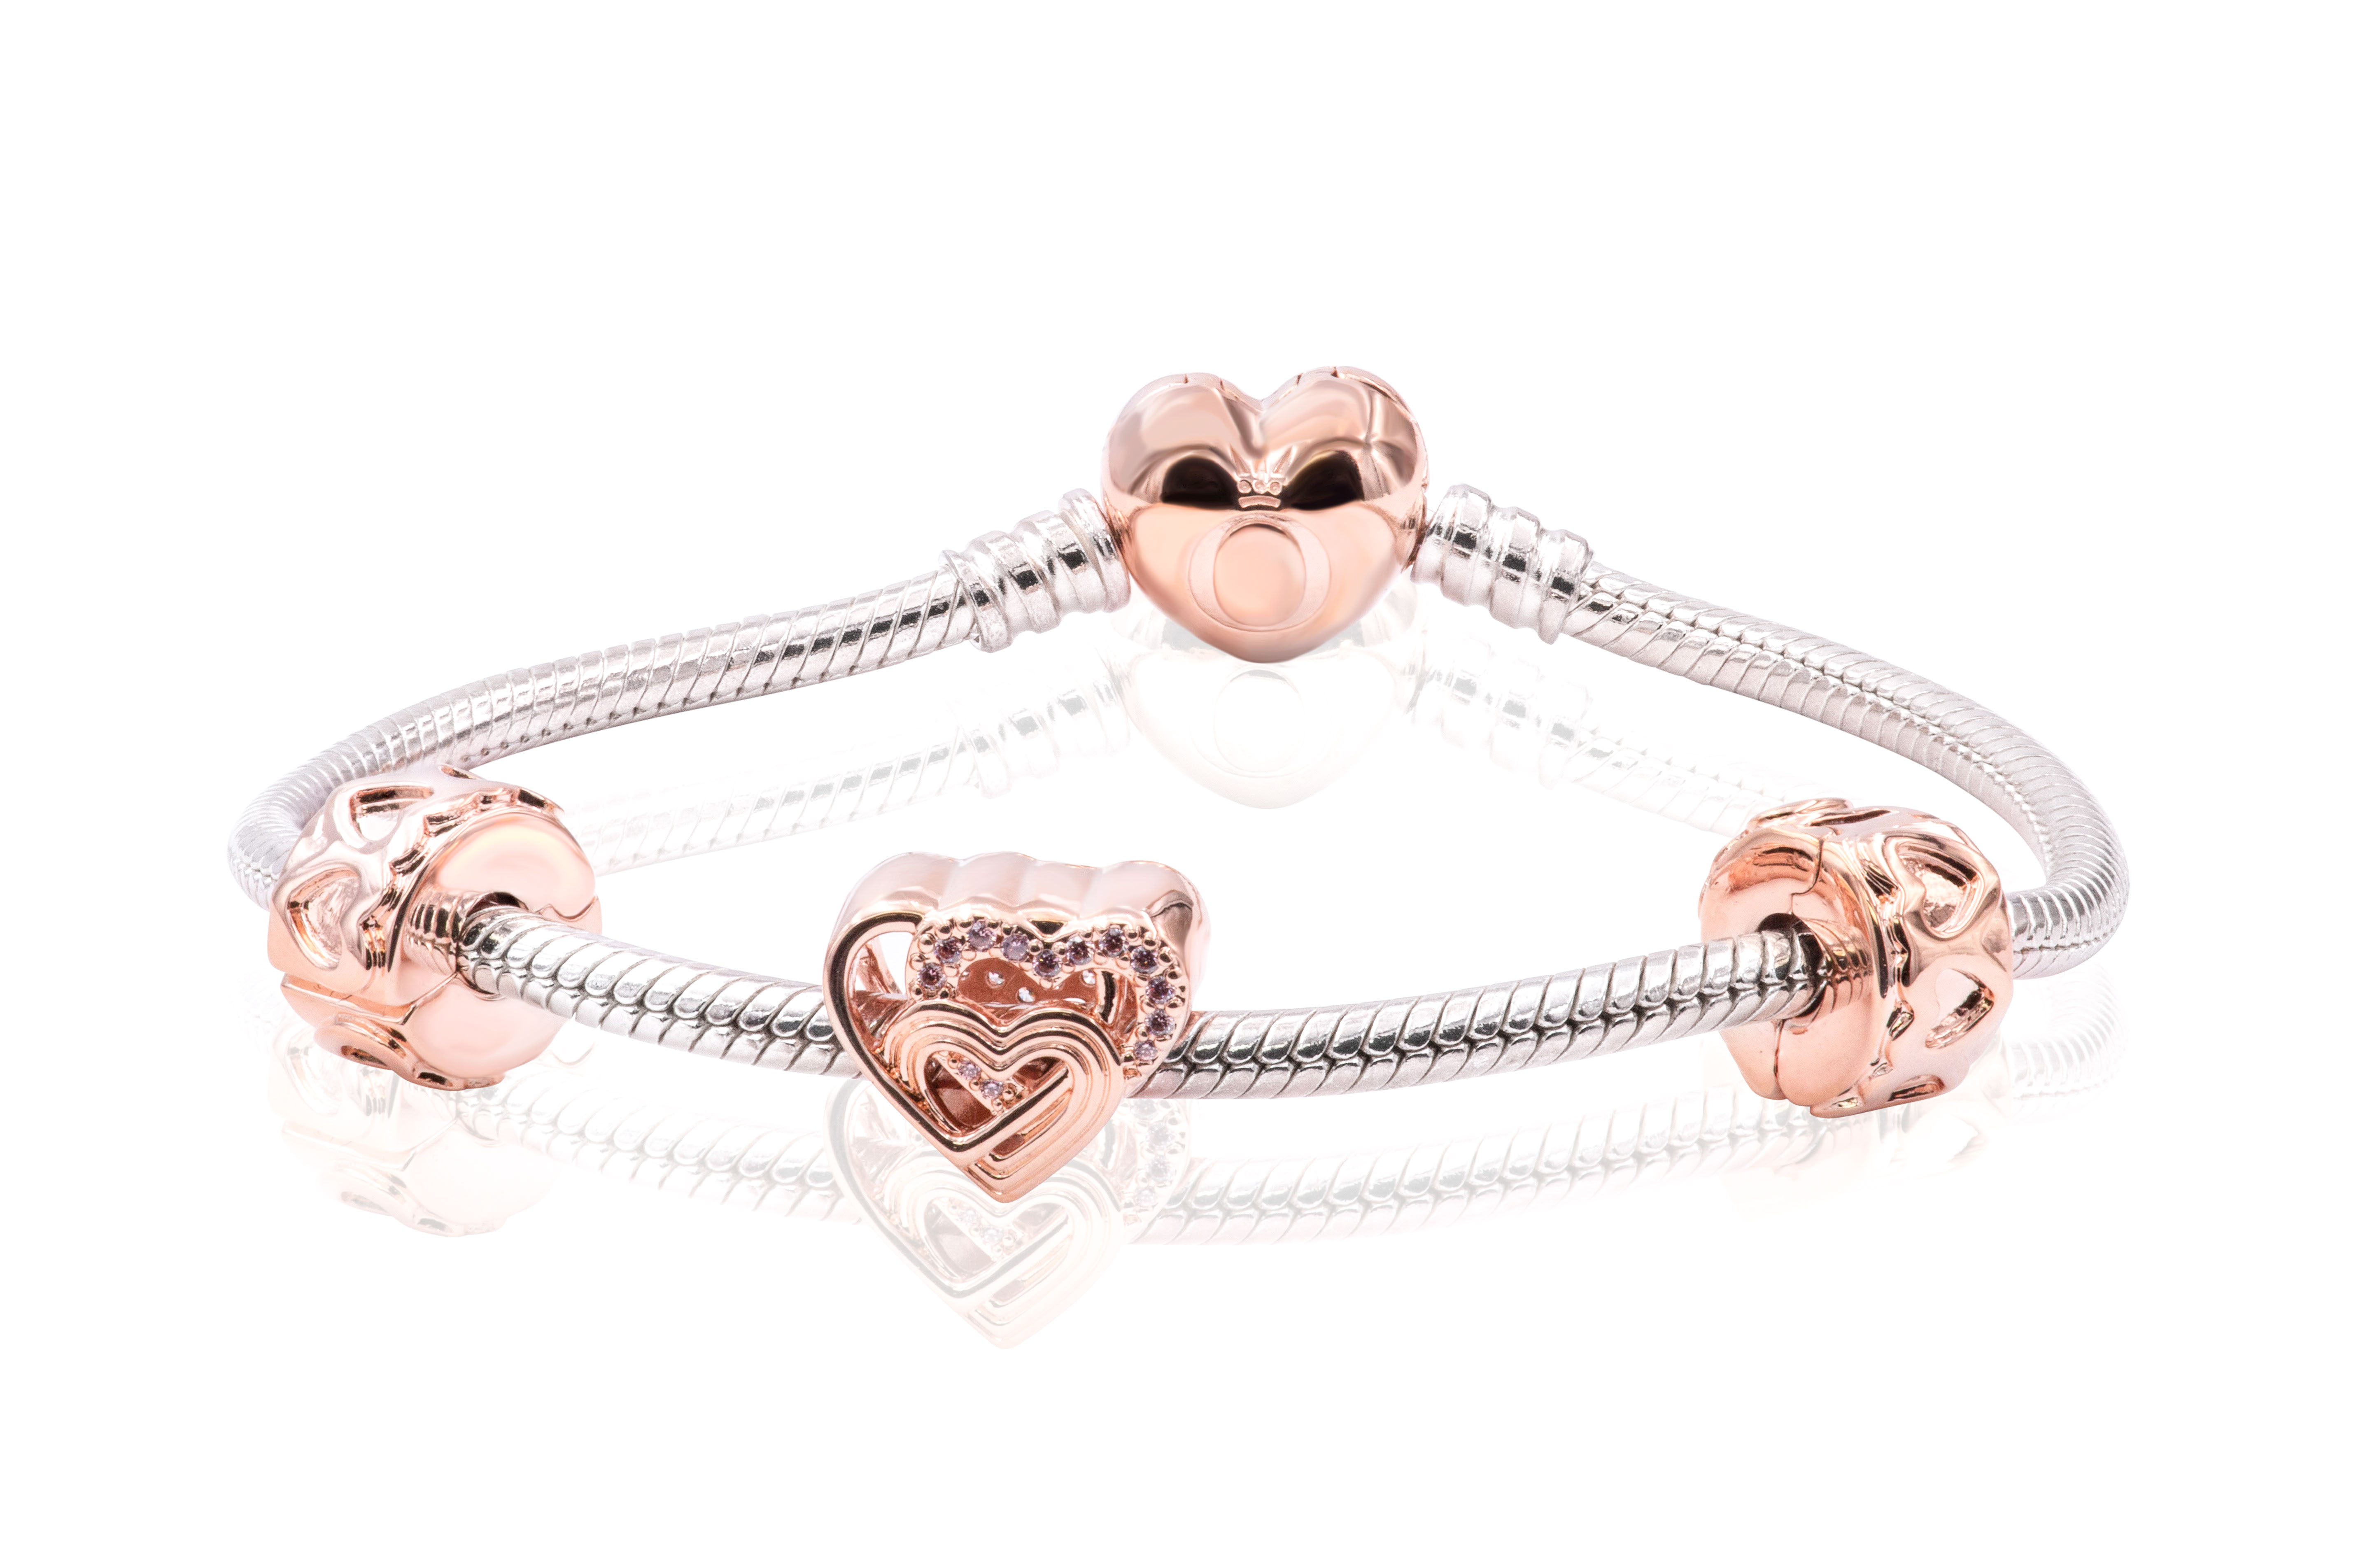 Pandora Intertwined Love Hearts Bracelet Gift Set